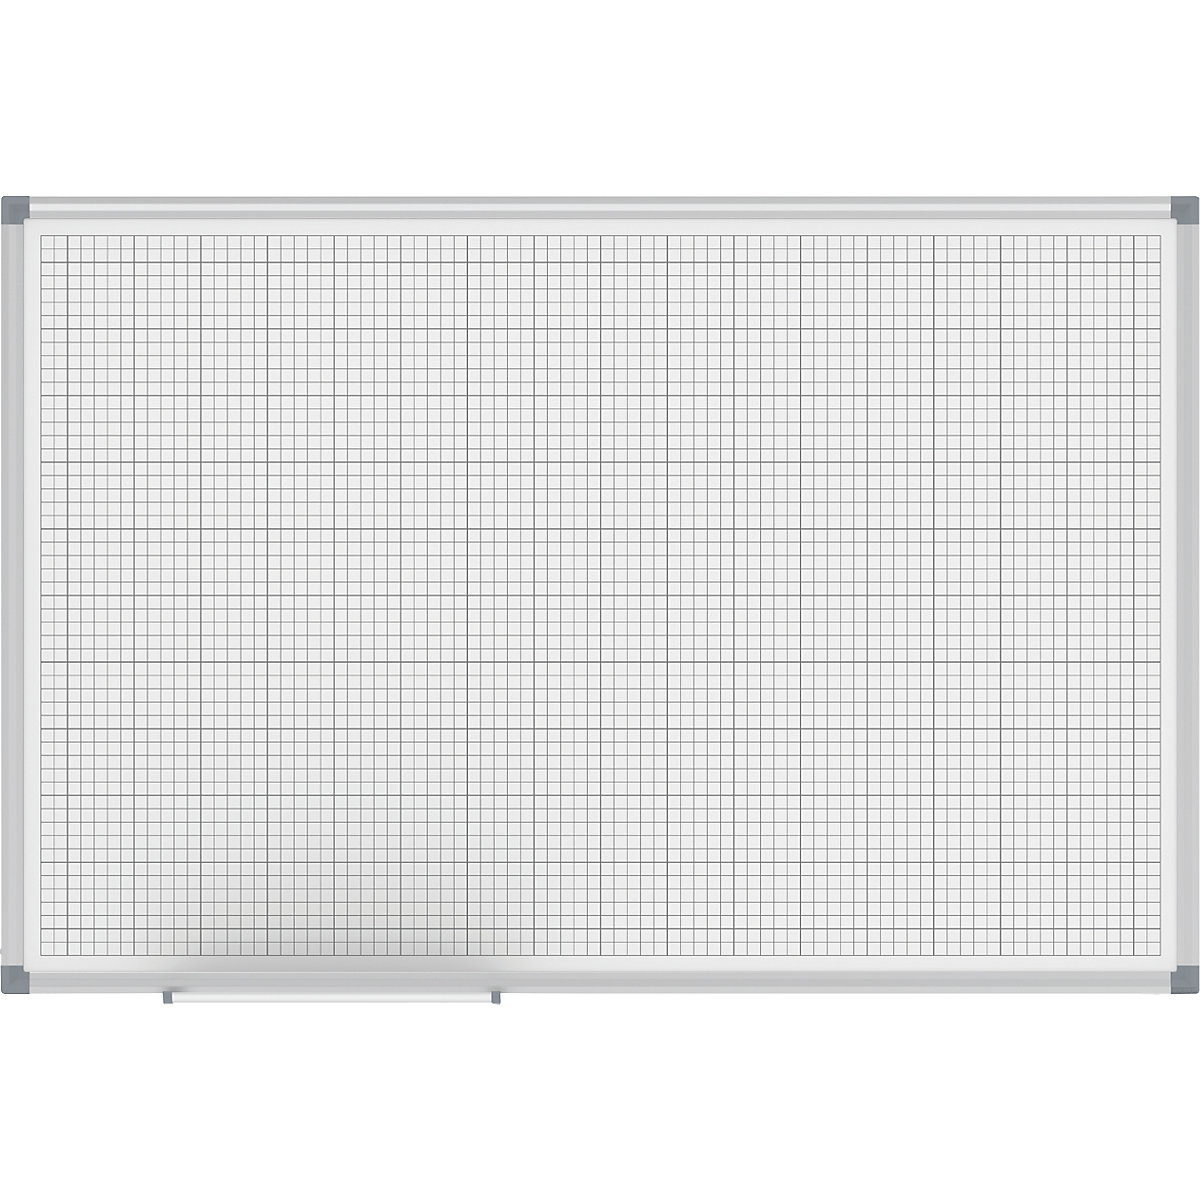 MAULstandard grid board, white – MAUL